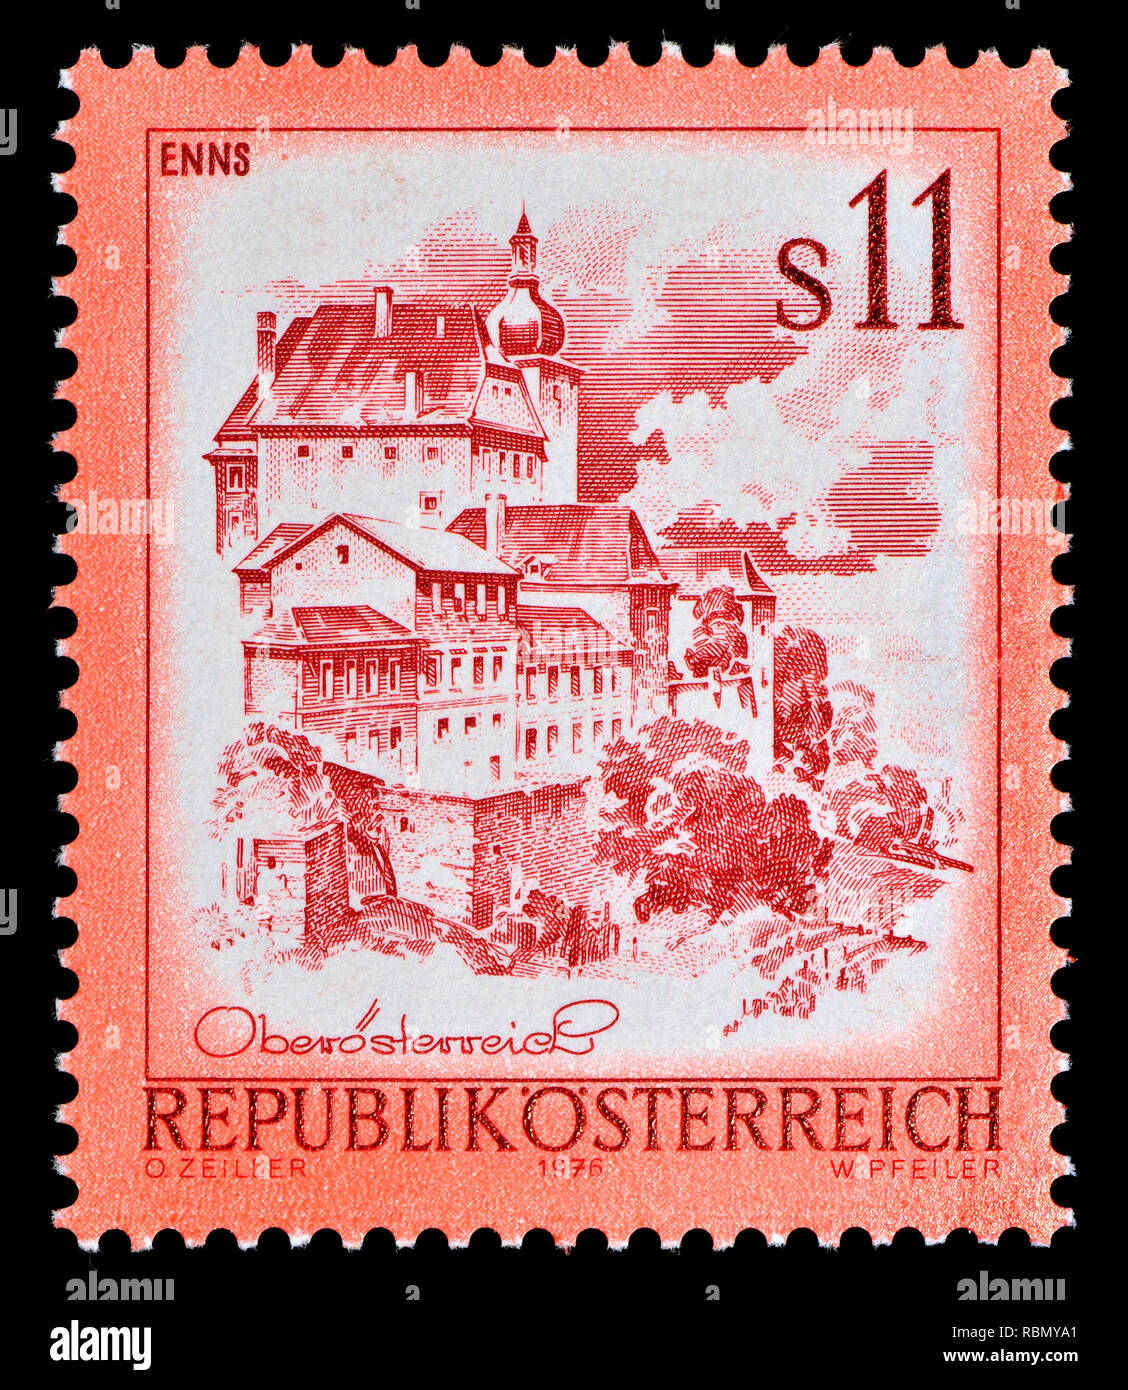 Austrian definitive postage stamp (1976) : Enns Stock Photo